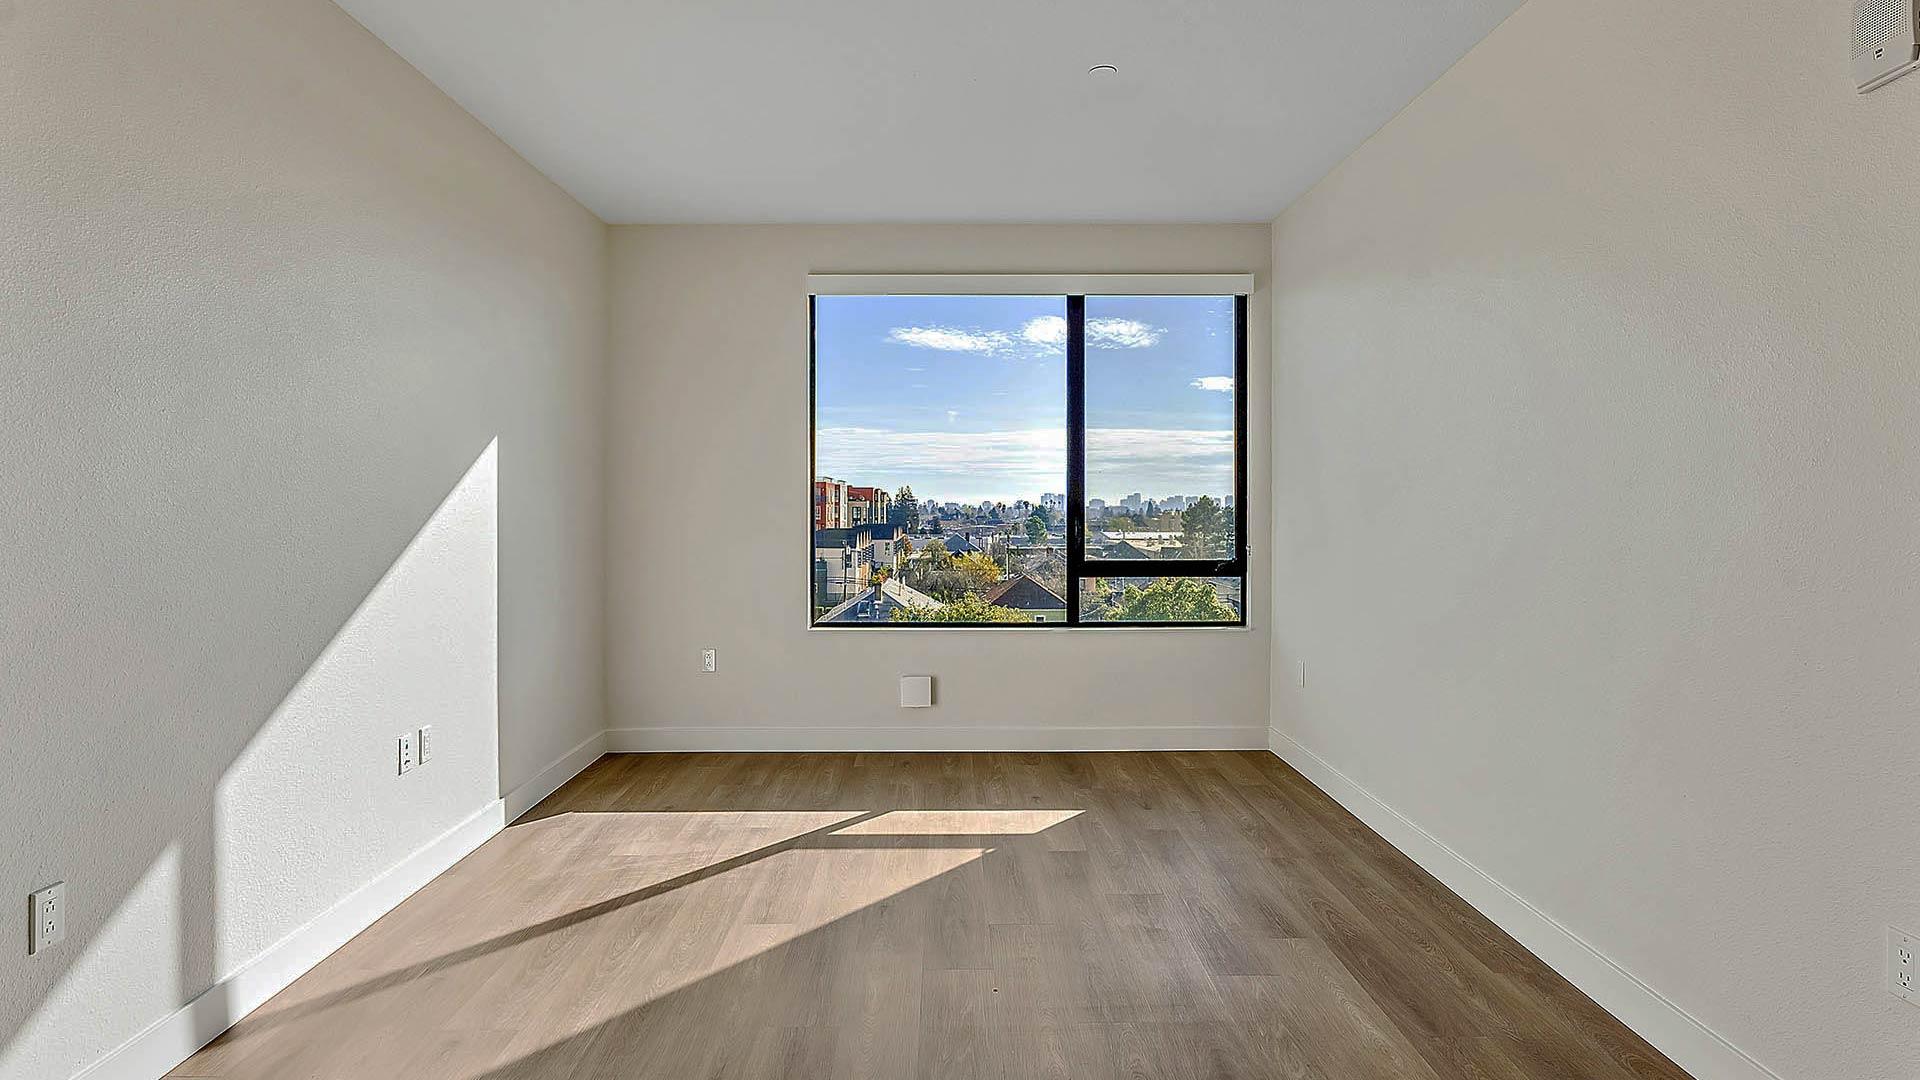 Blake apartments b4 floorplan window view 1